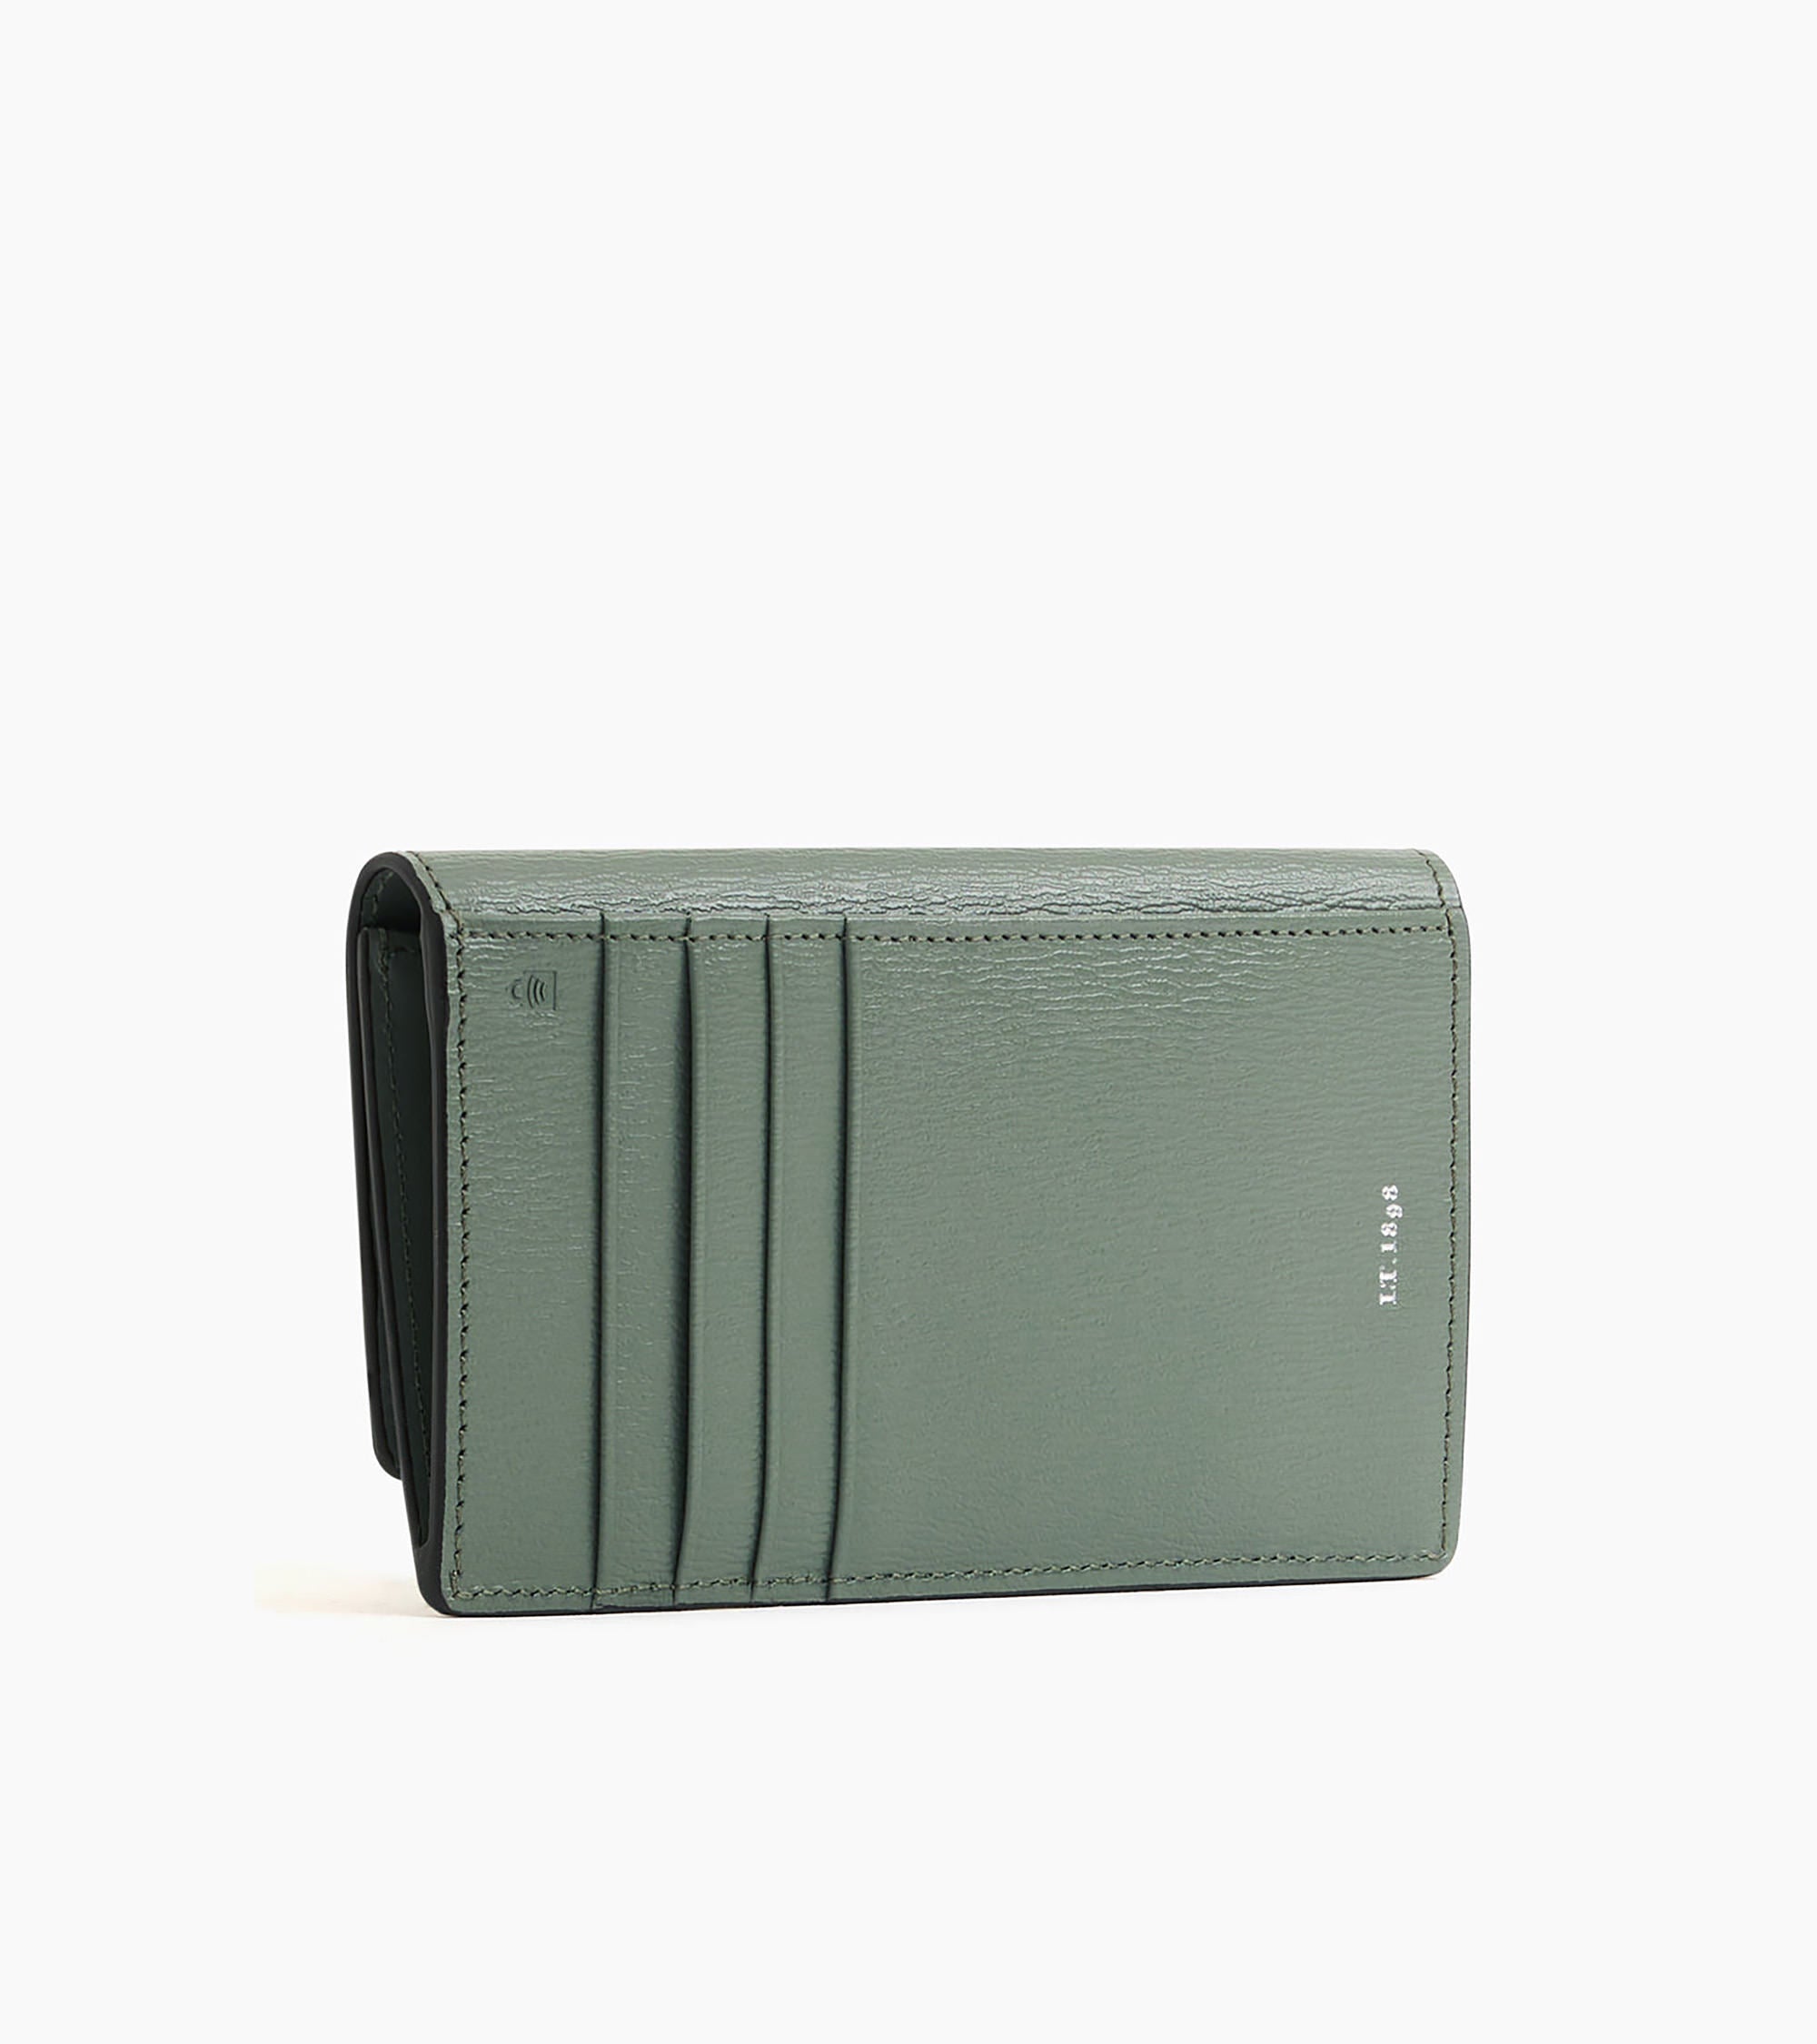 Naya flap card case in cork effect leather